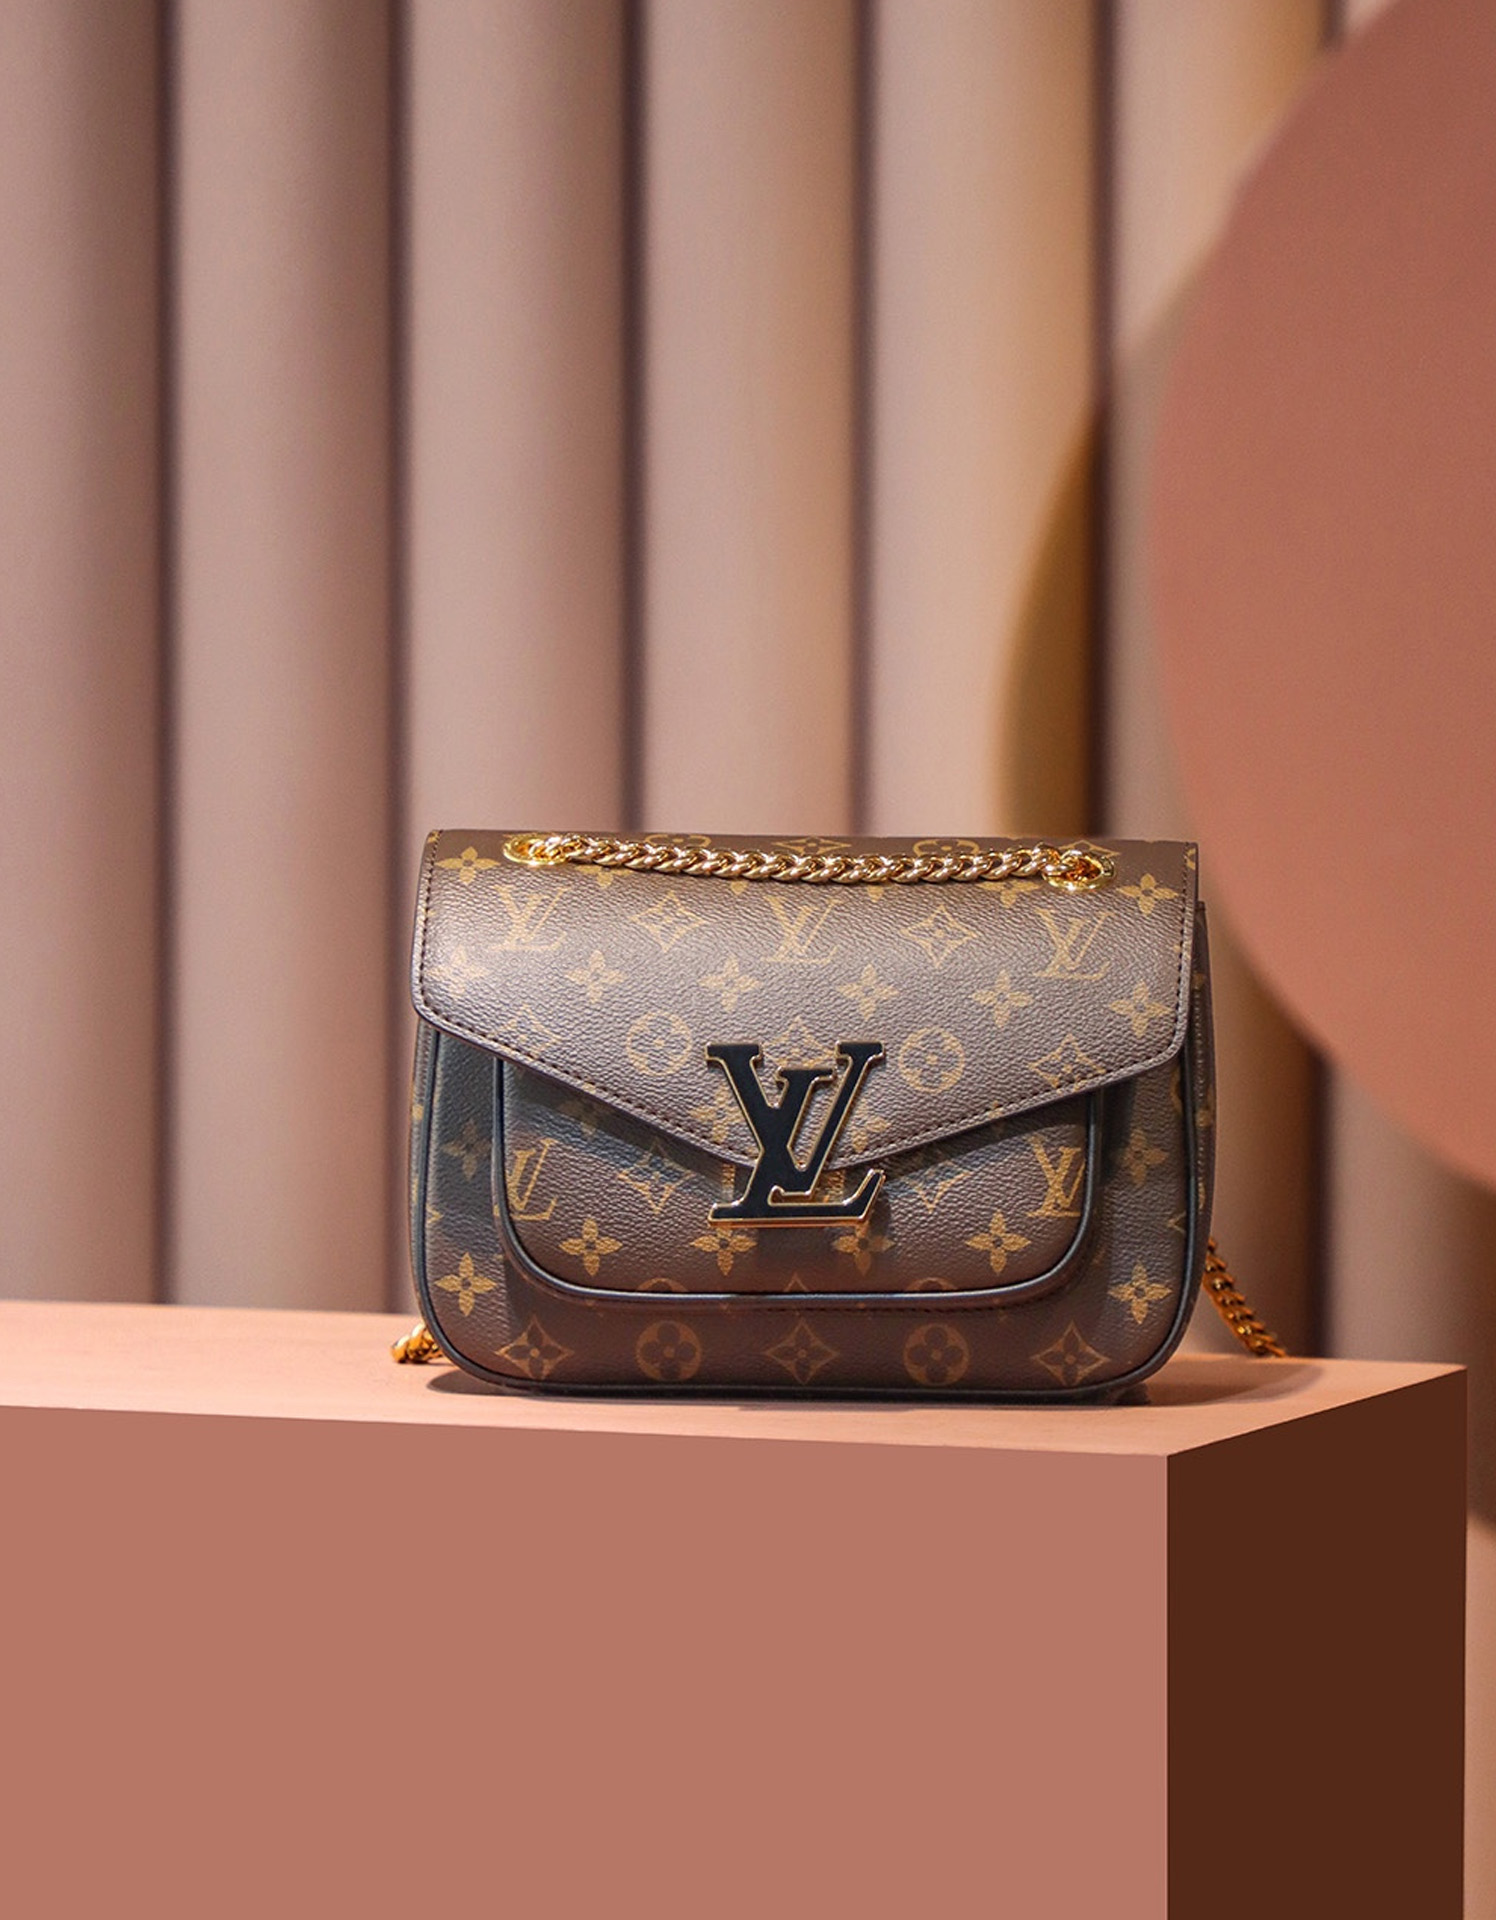 Louis Vuitton Passy Bag